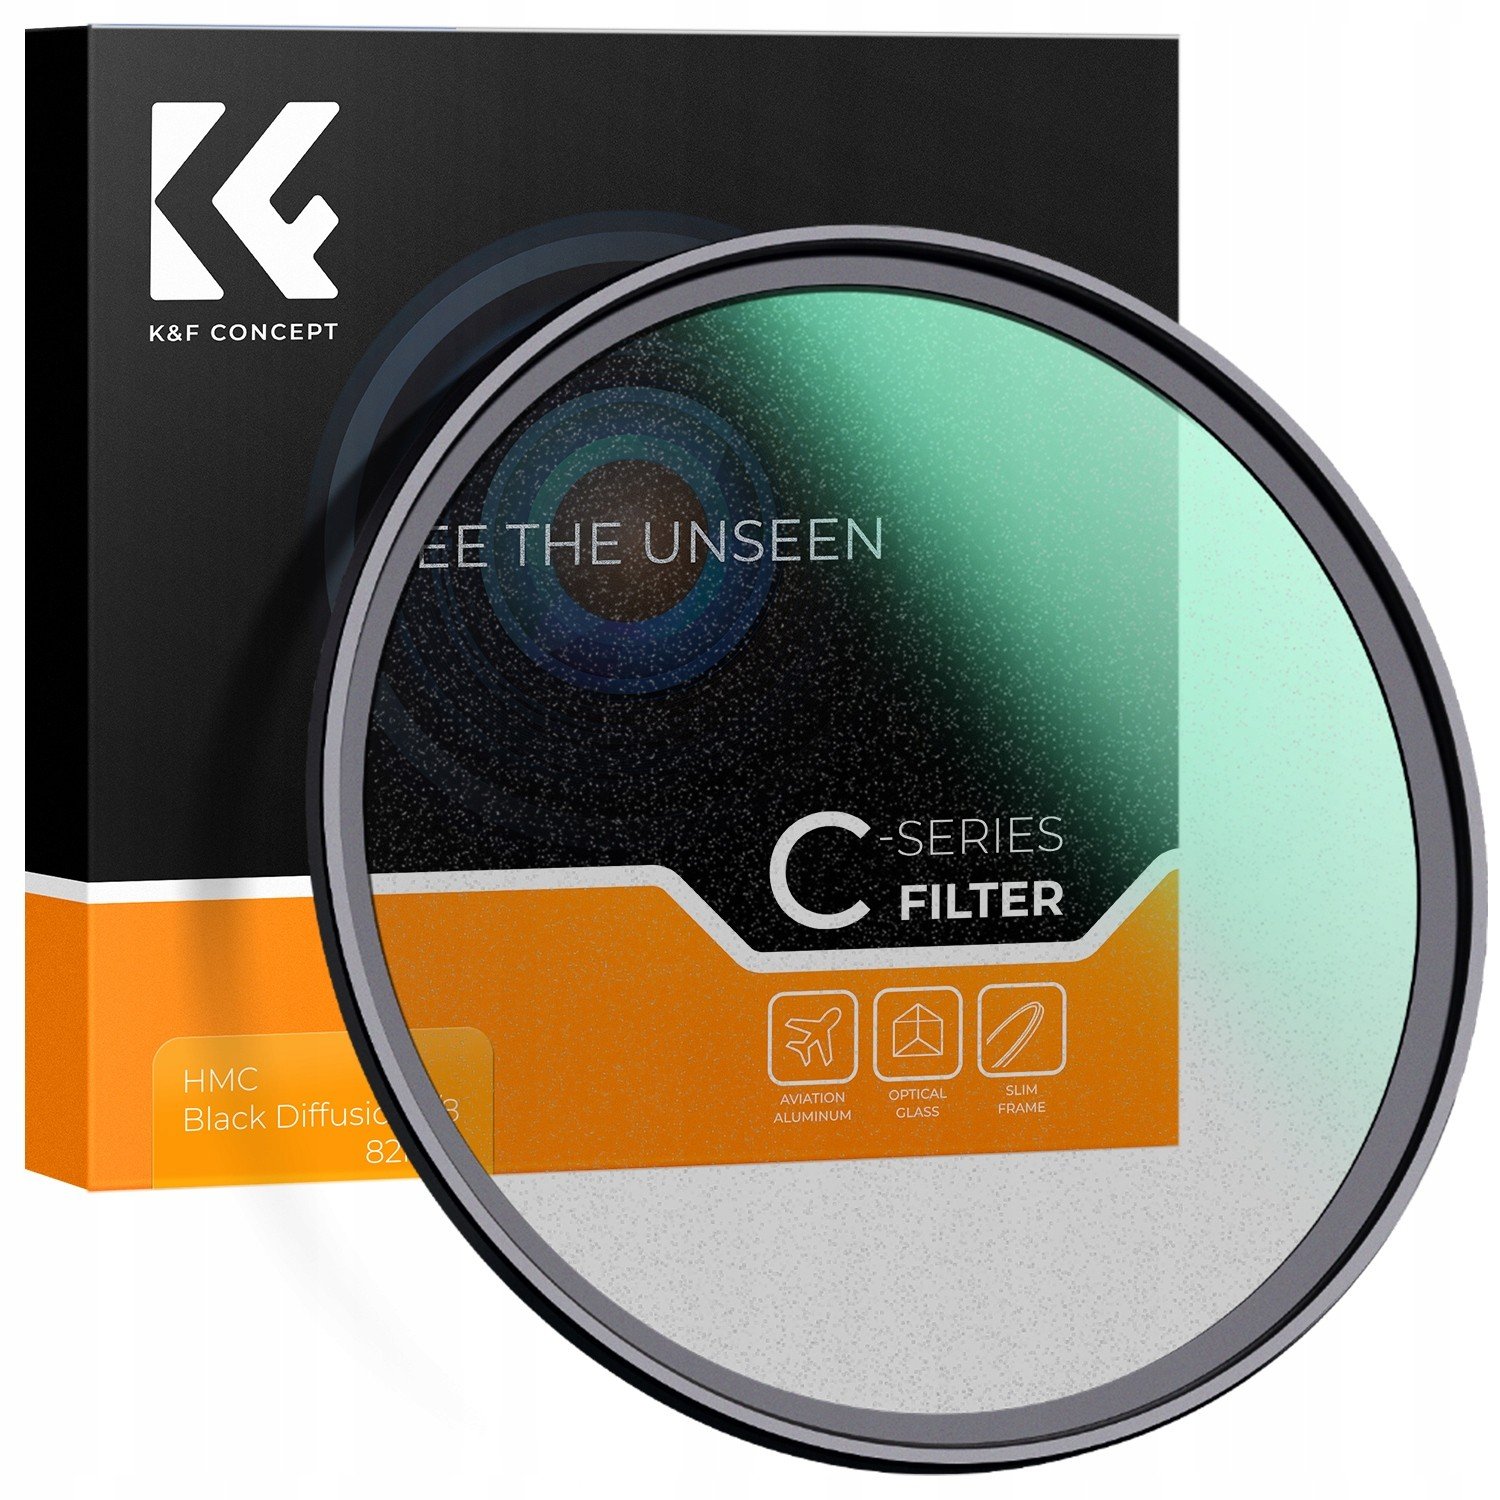 Difuzní filtr Black Mist 1/8 55mm Nano-C K&f